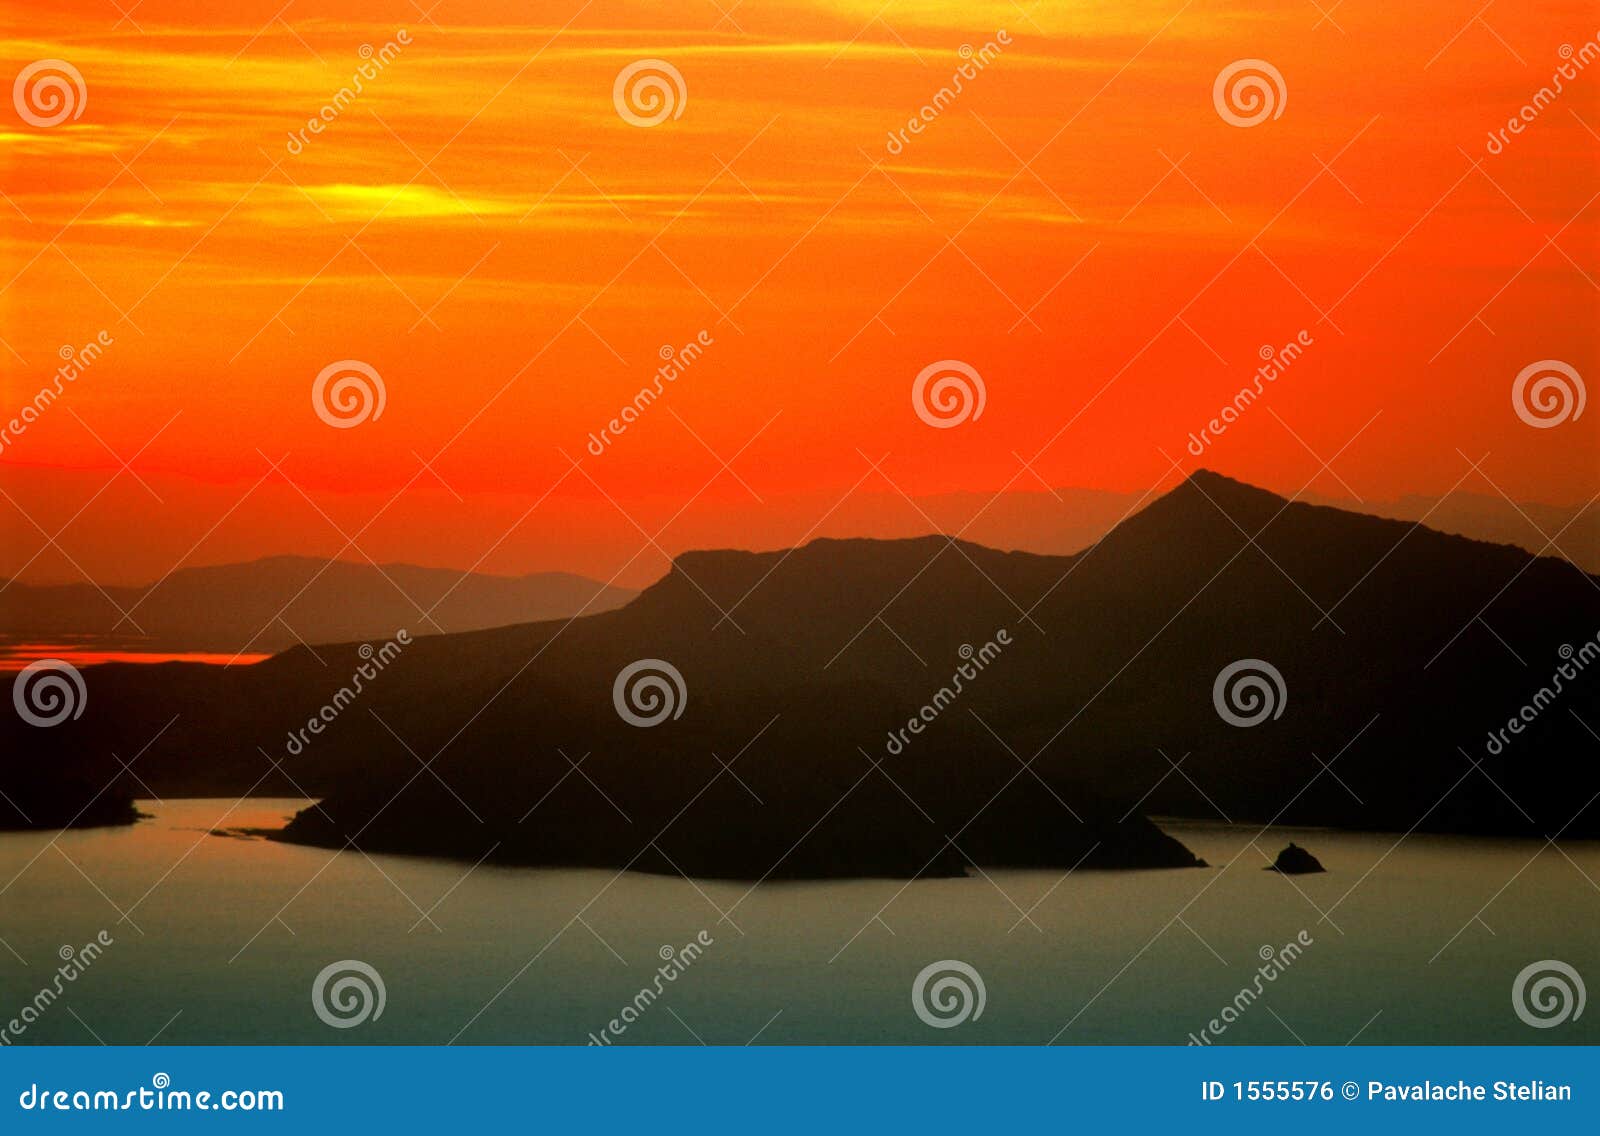 puno sunset over lake titicaca 2